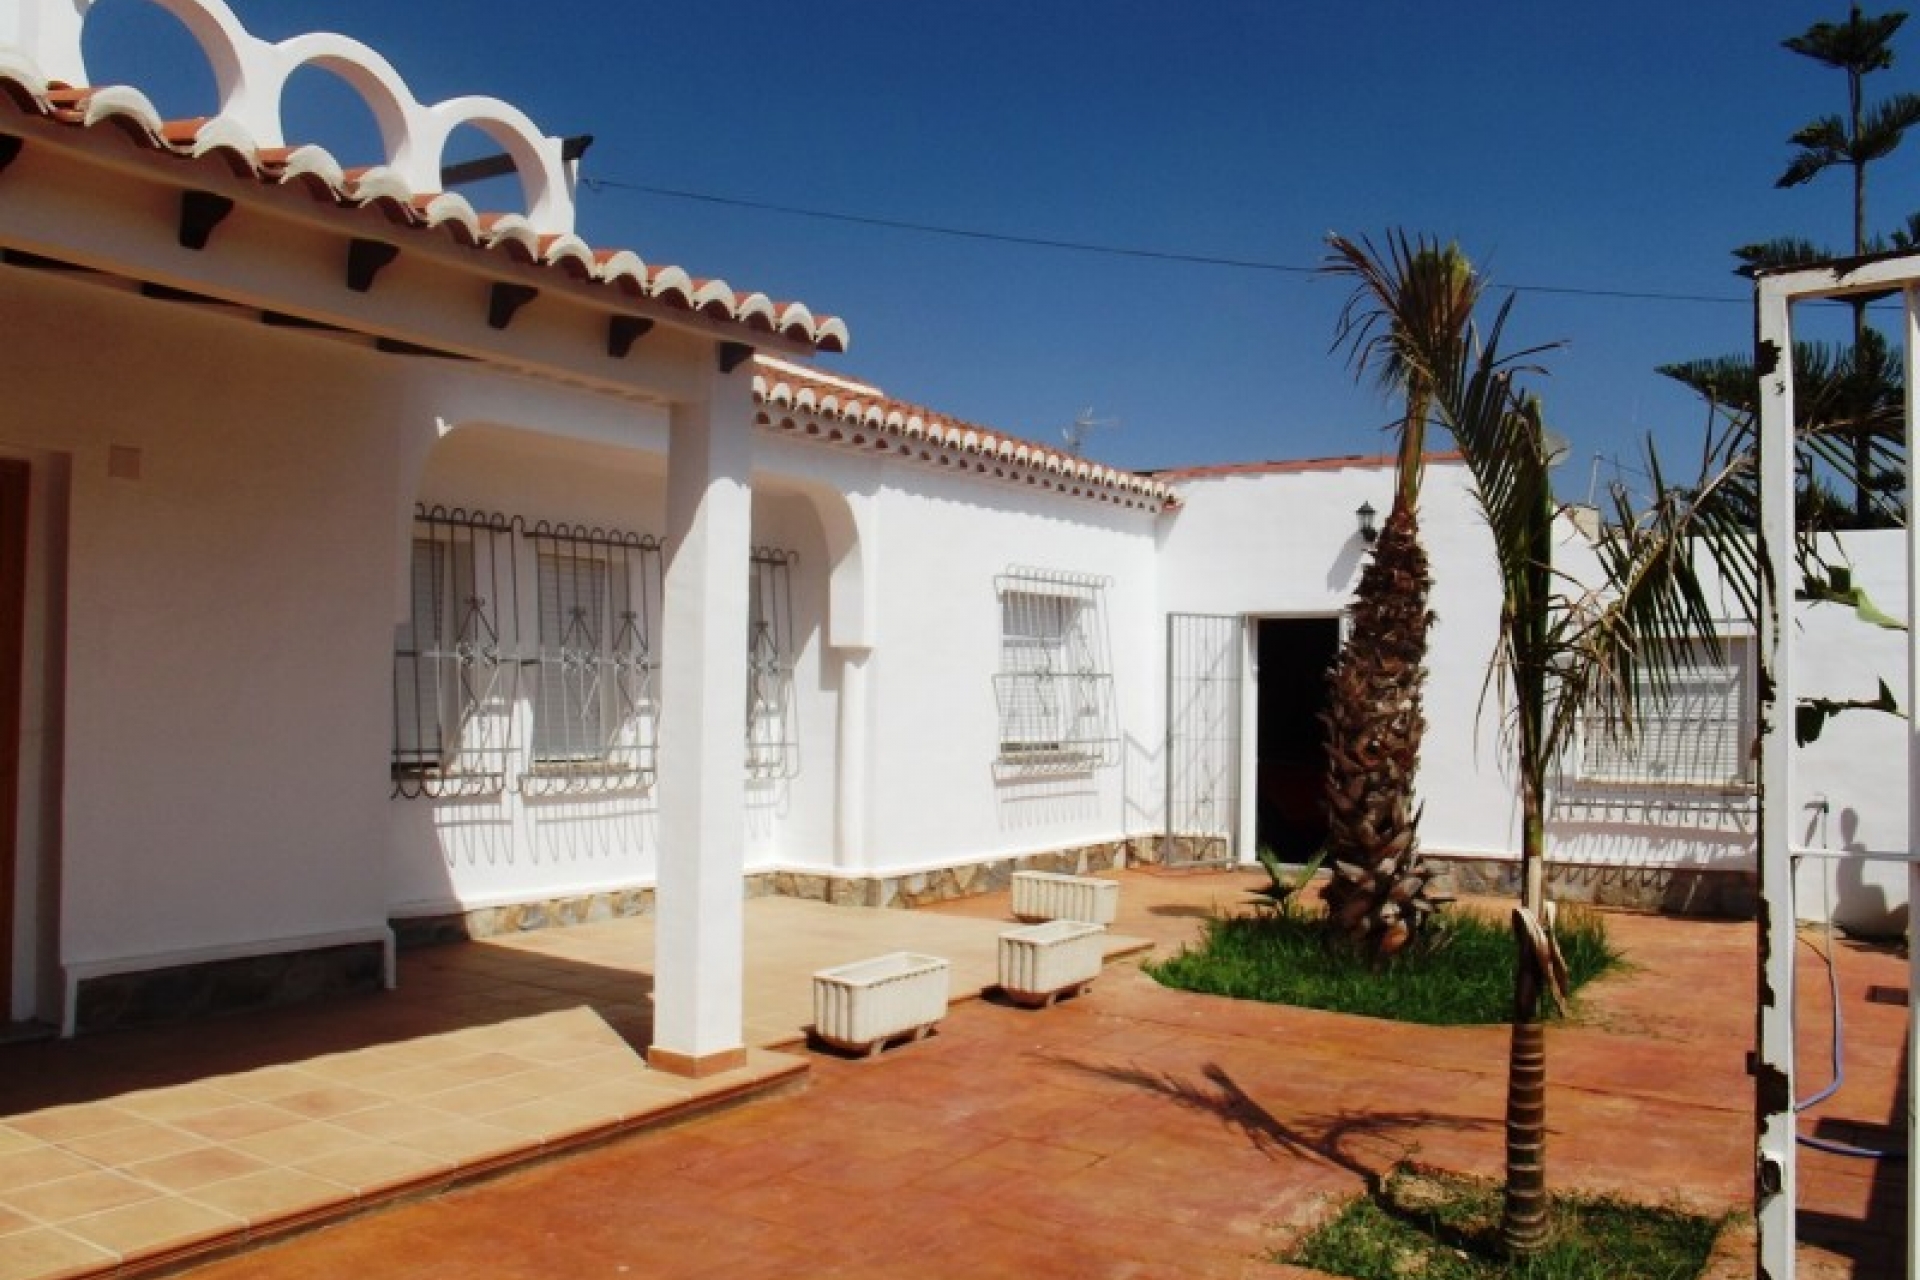 Property for sale in Torreta Florida cheap, Costa Blanca bargain close to Torrevieja and La Siesta, Spain